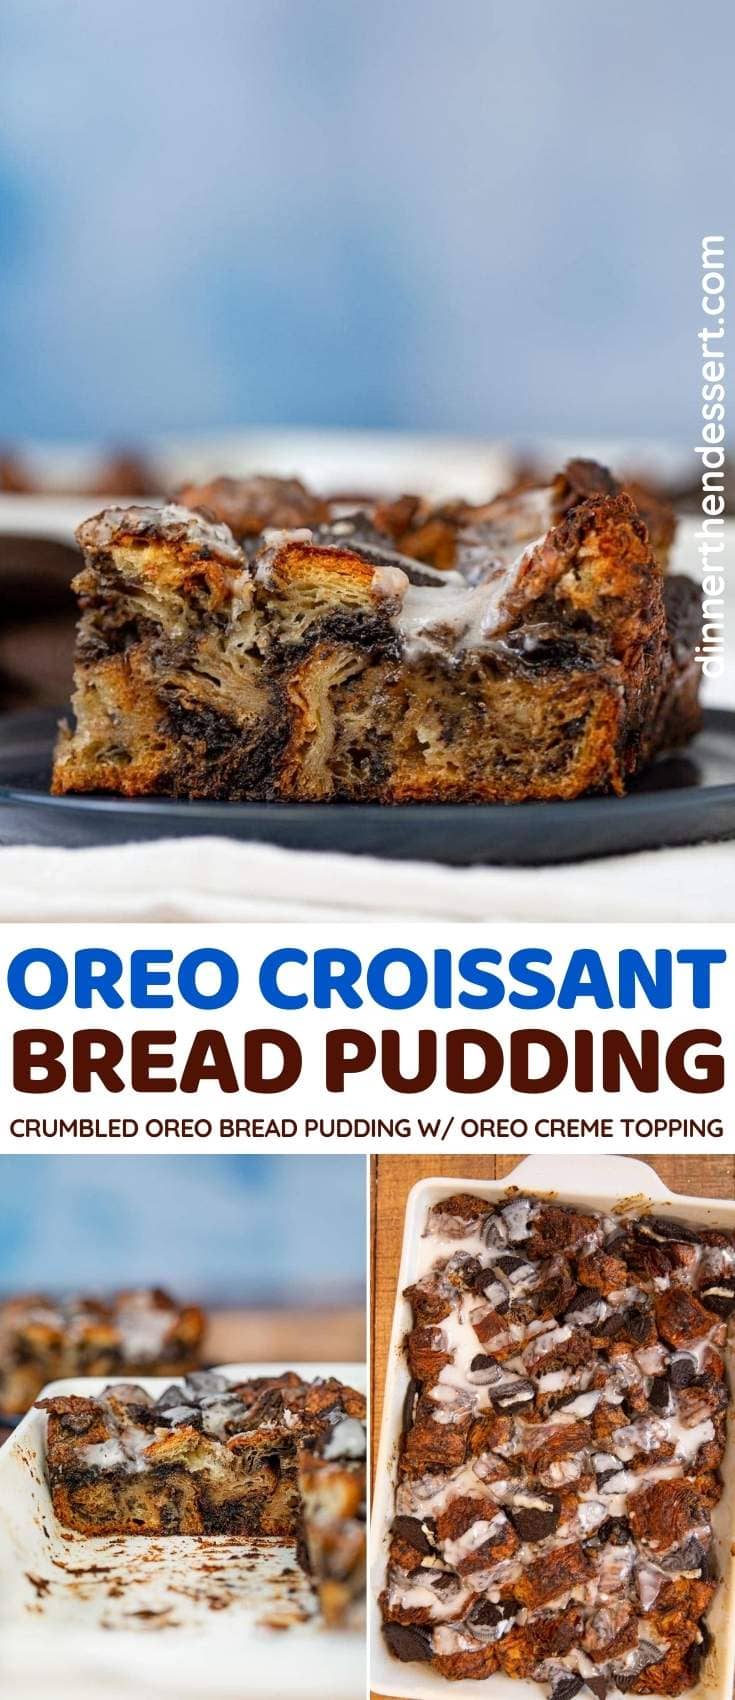 Oreo Croissant Bread Pudding collage